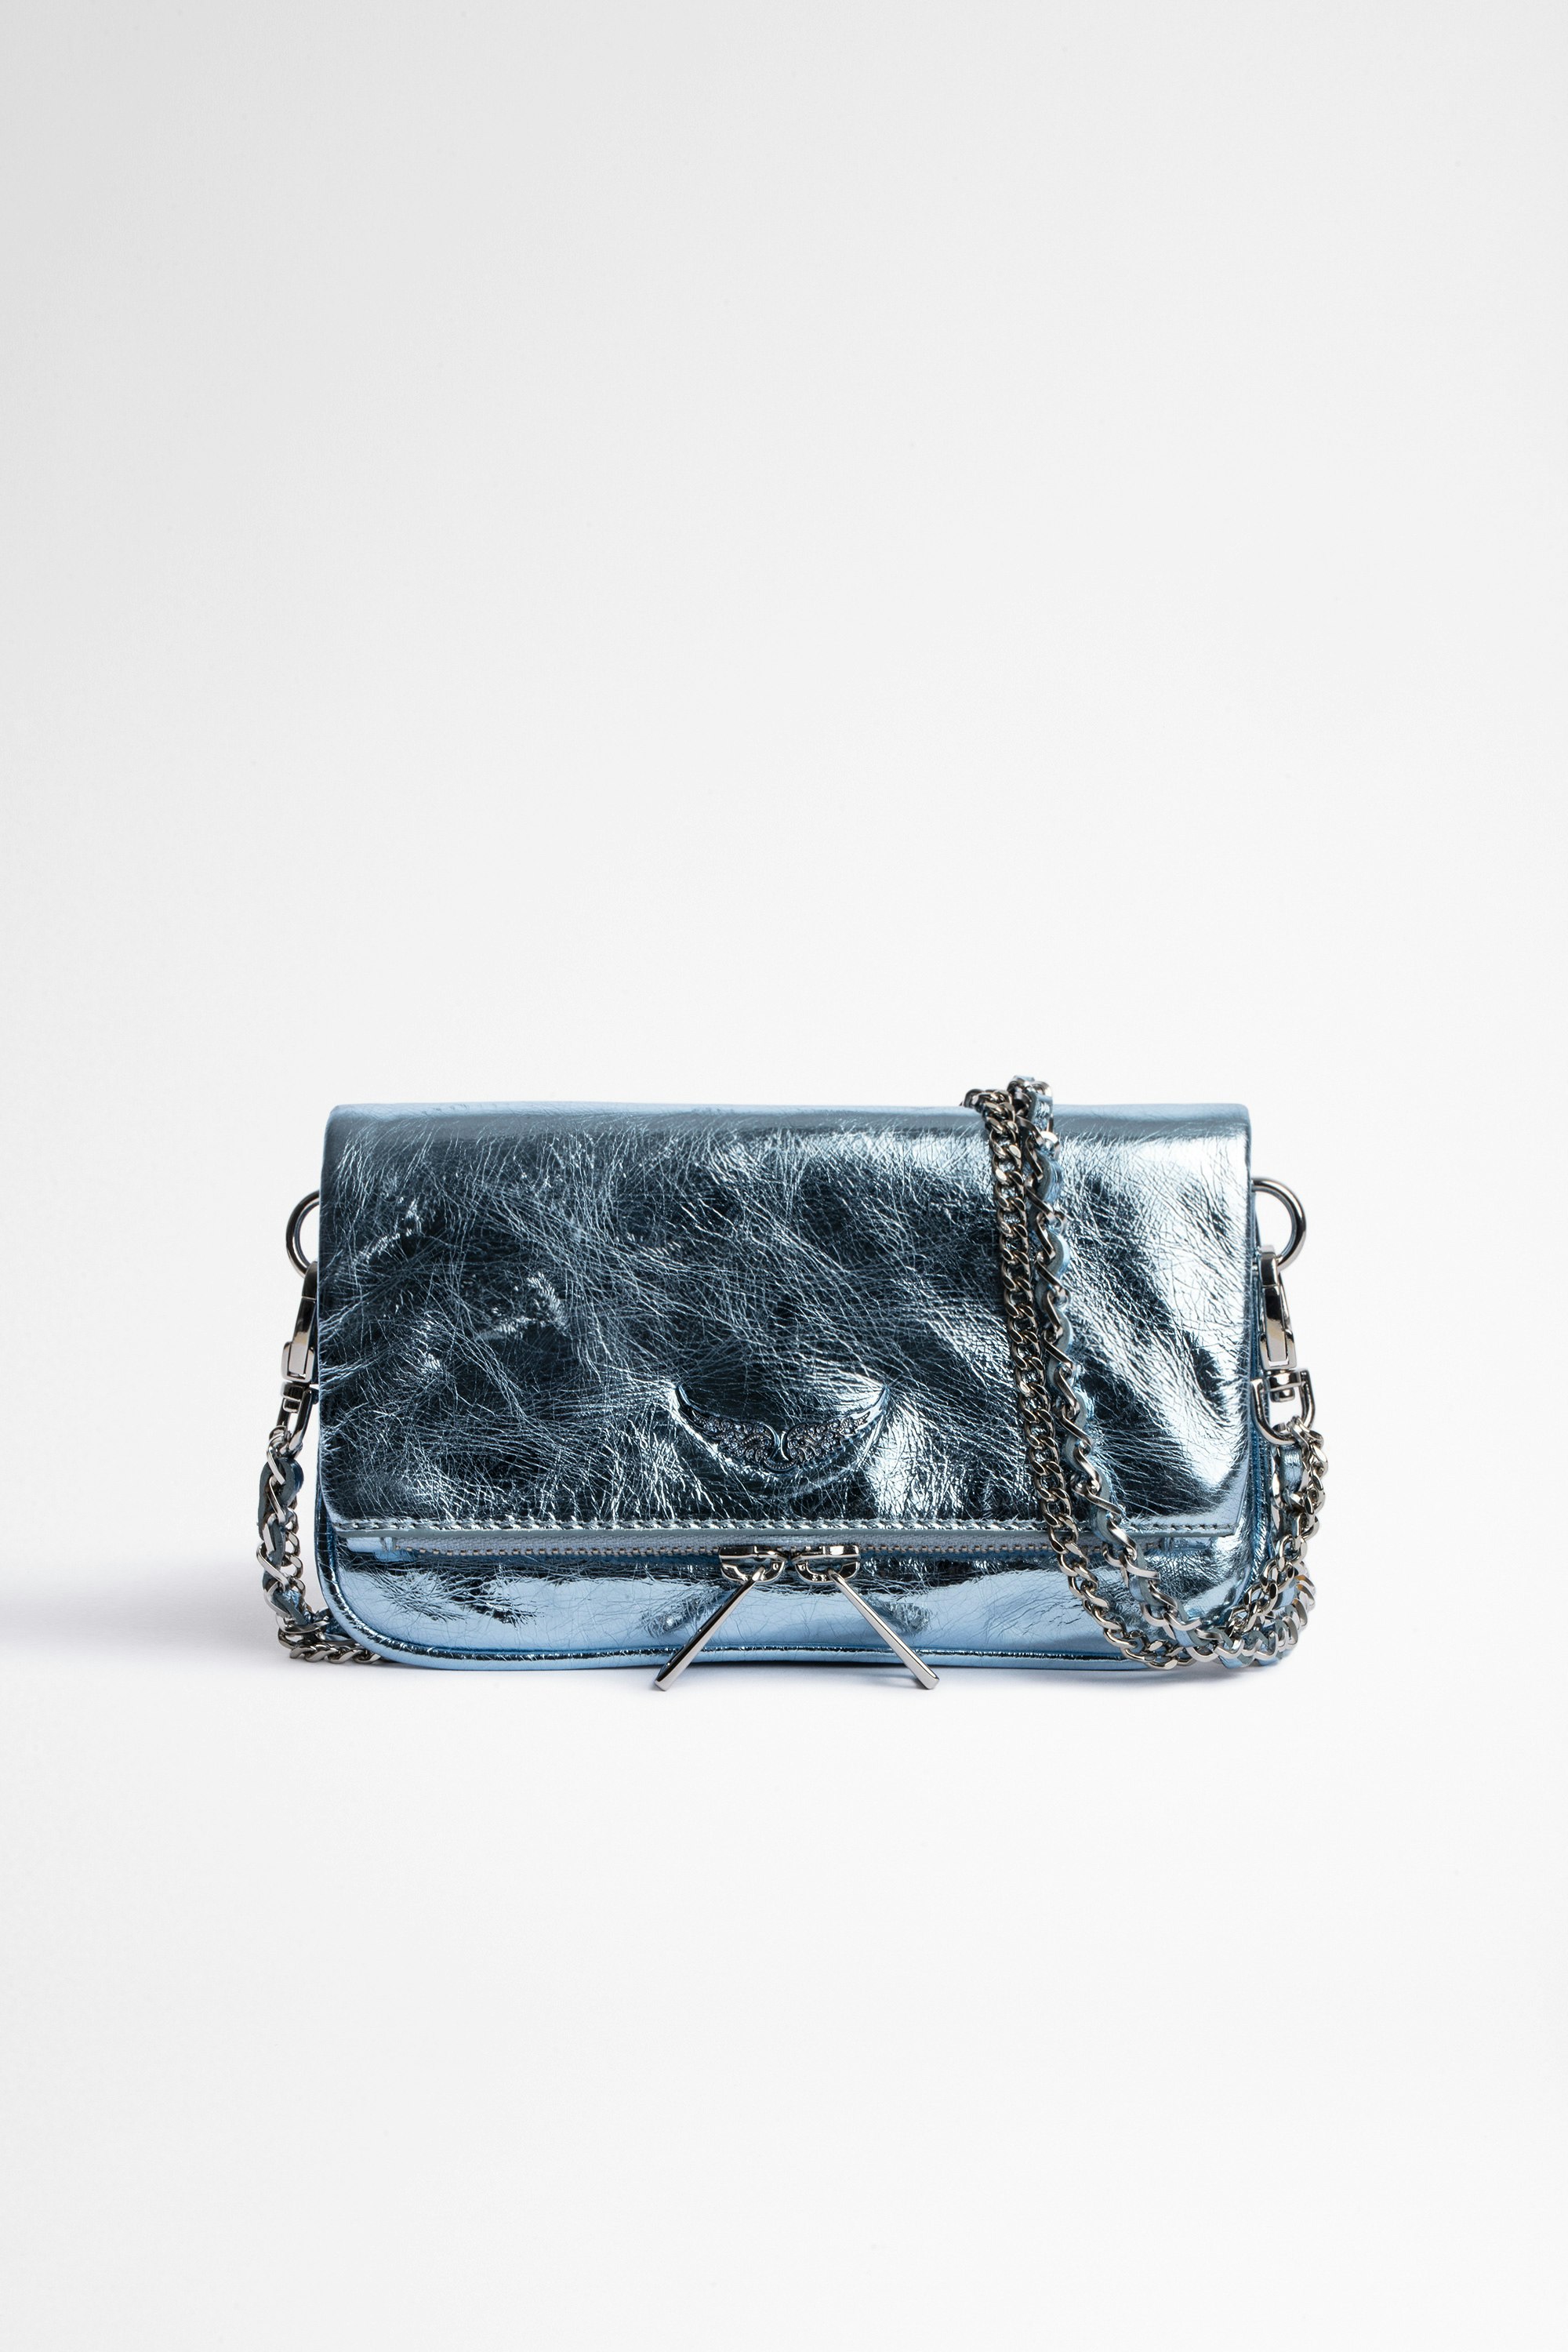 Rock Nano クラッチバッグ Women's clutch bag in metallic sky-blue leather